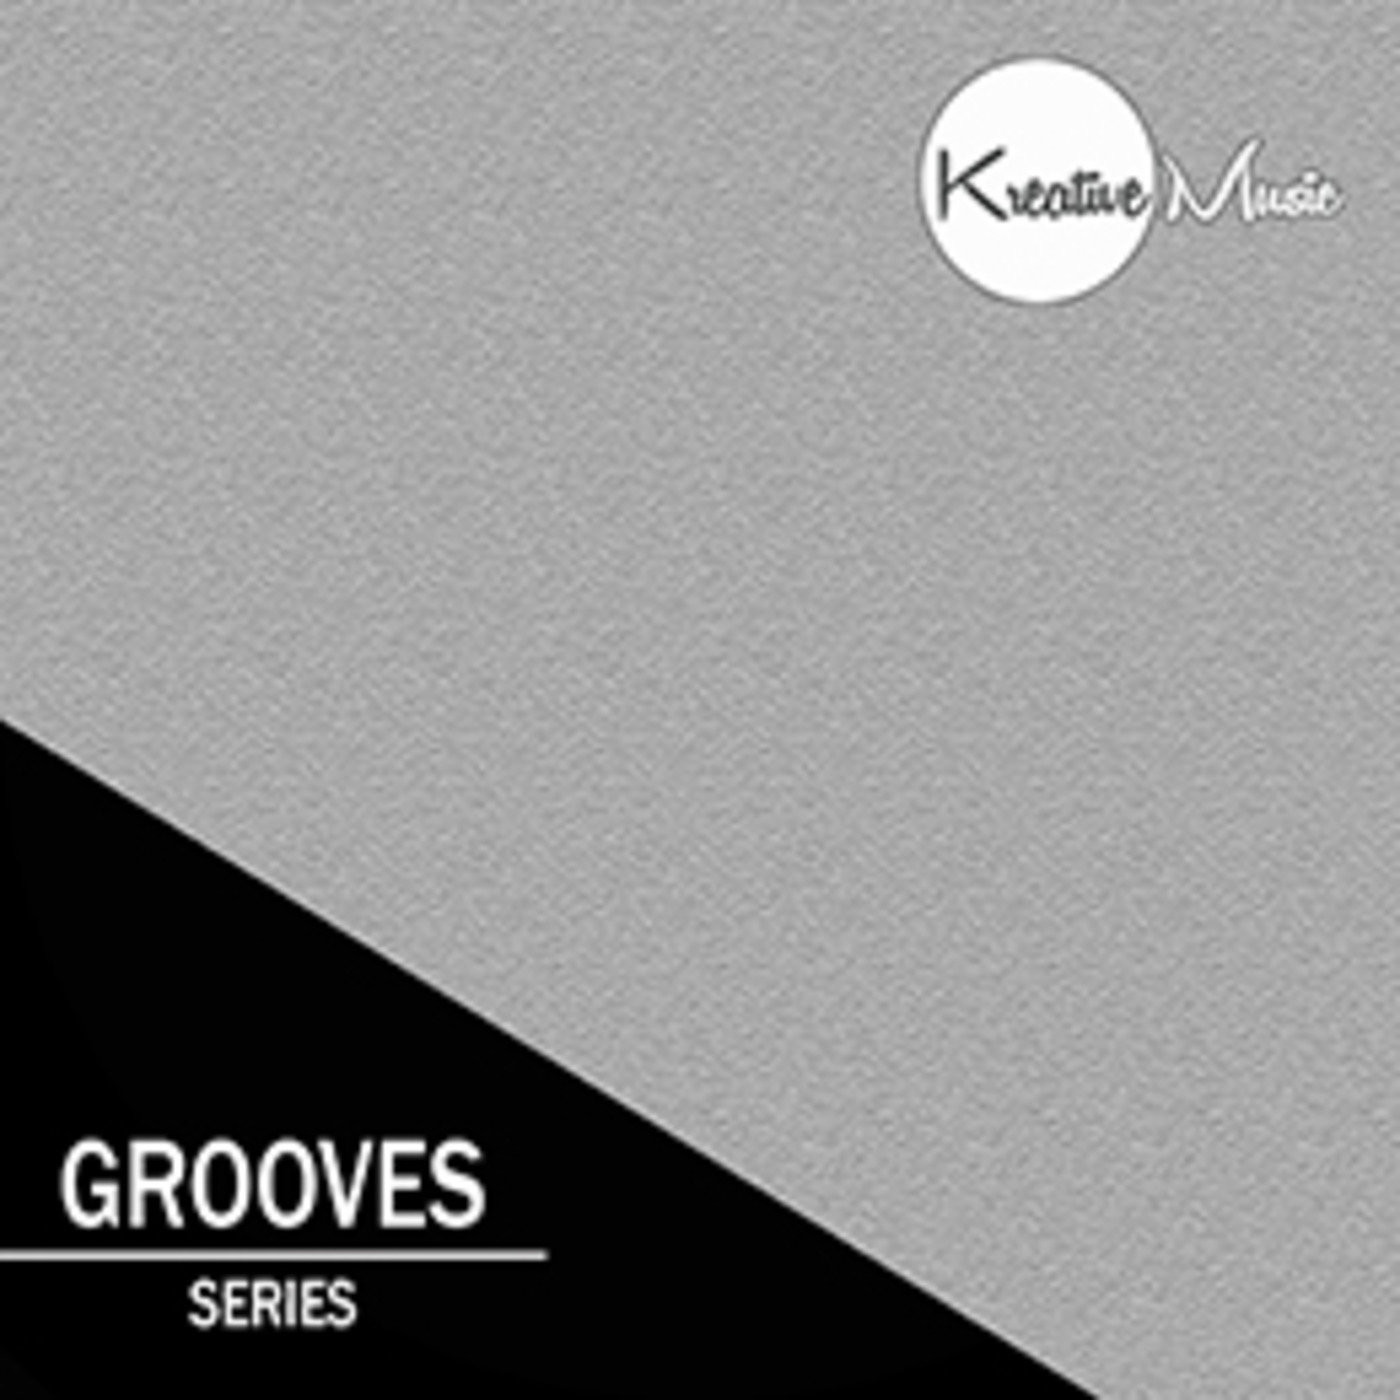 001 Grooves by Huakim Eloyuwon